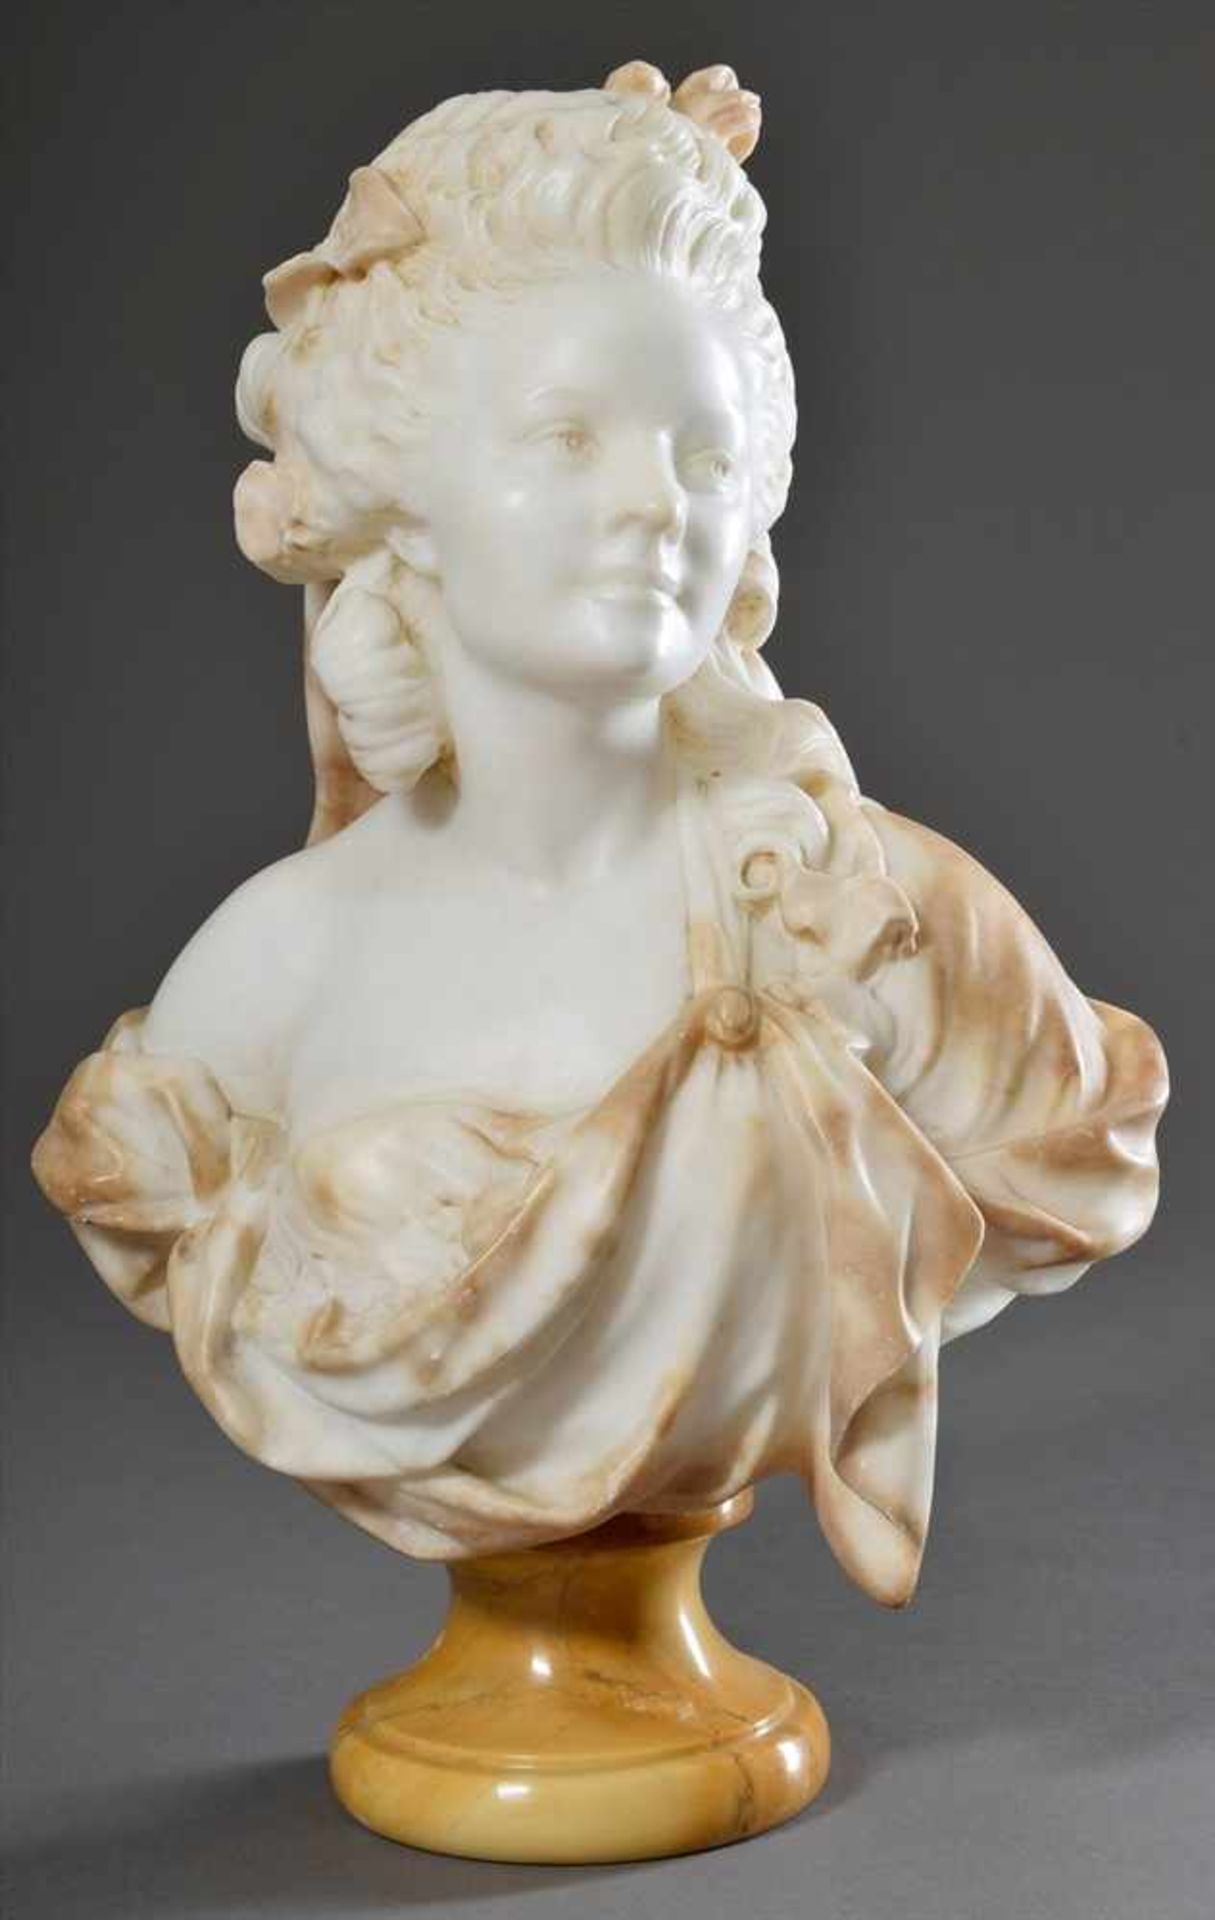 Marmor Büste "Madame Du Barry", in weiß/gelbem Marmor, 19. Jh., H. 39cm, minimal bestoßenMarble bust